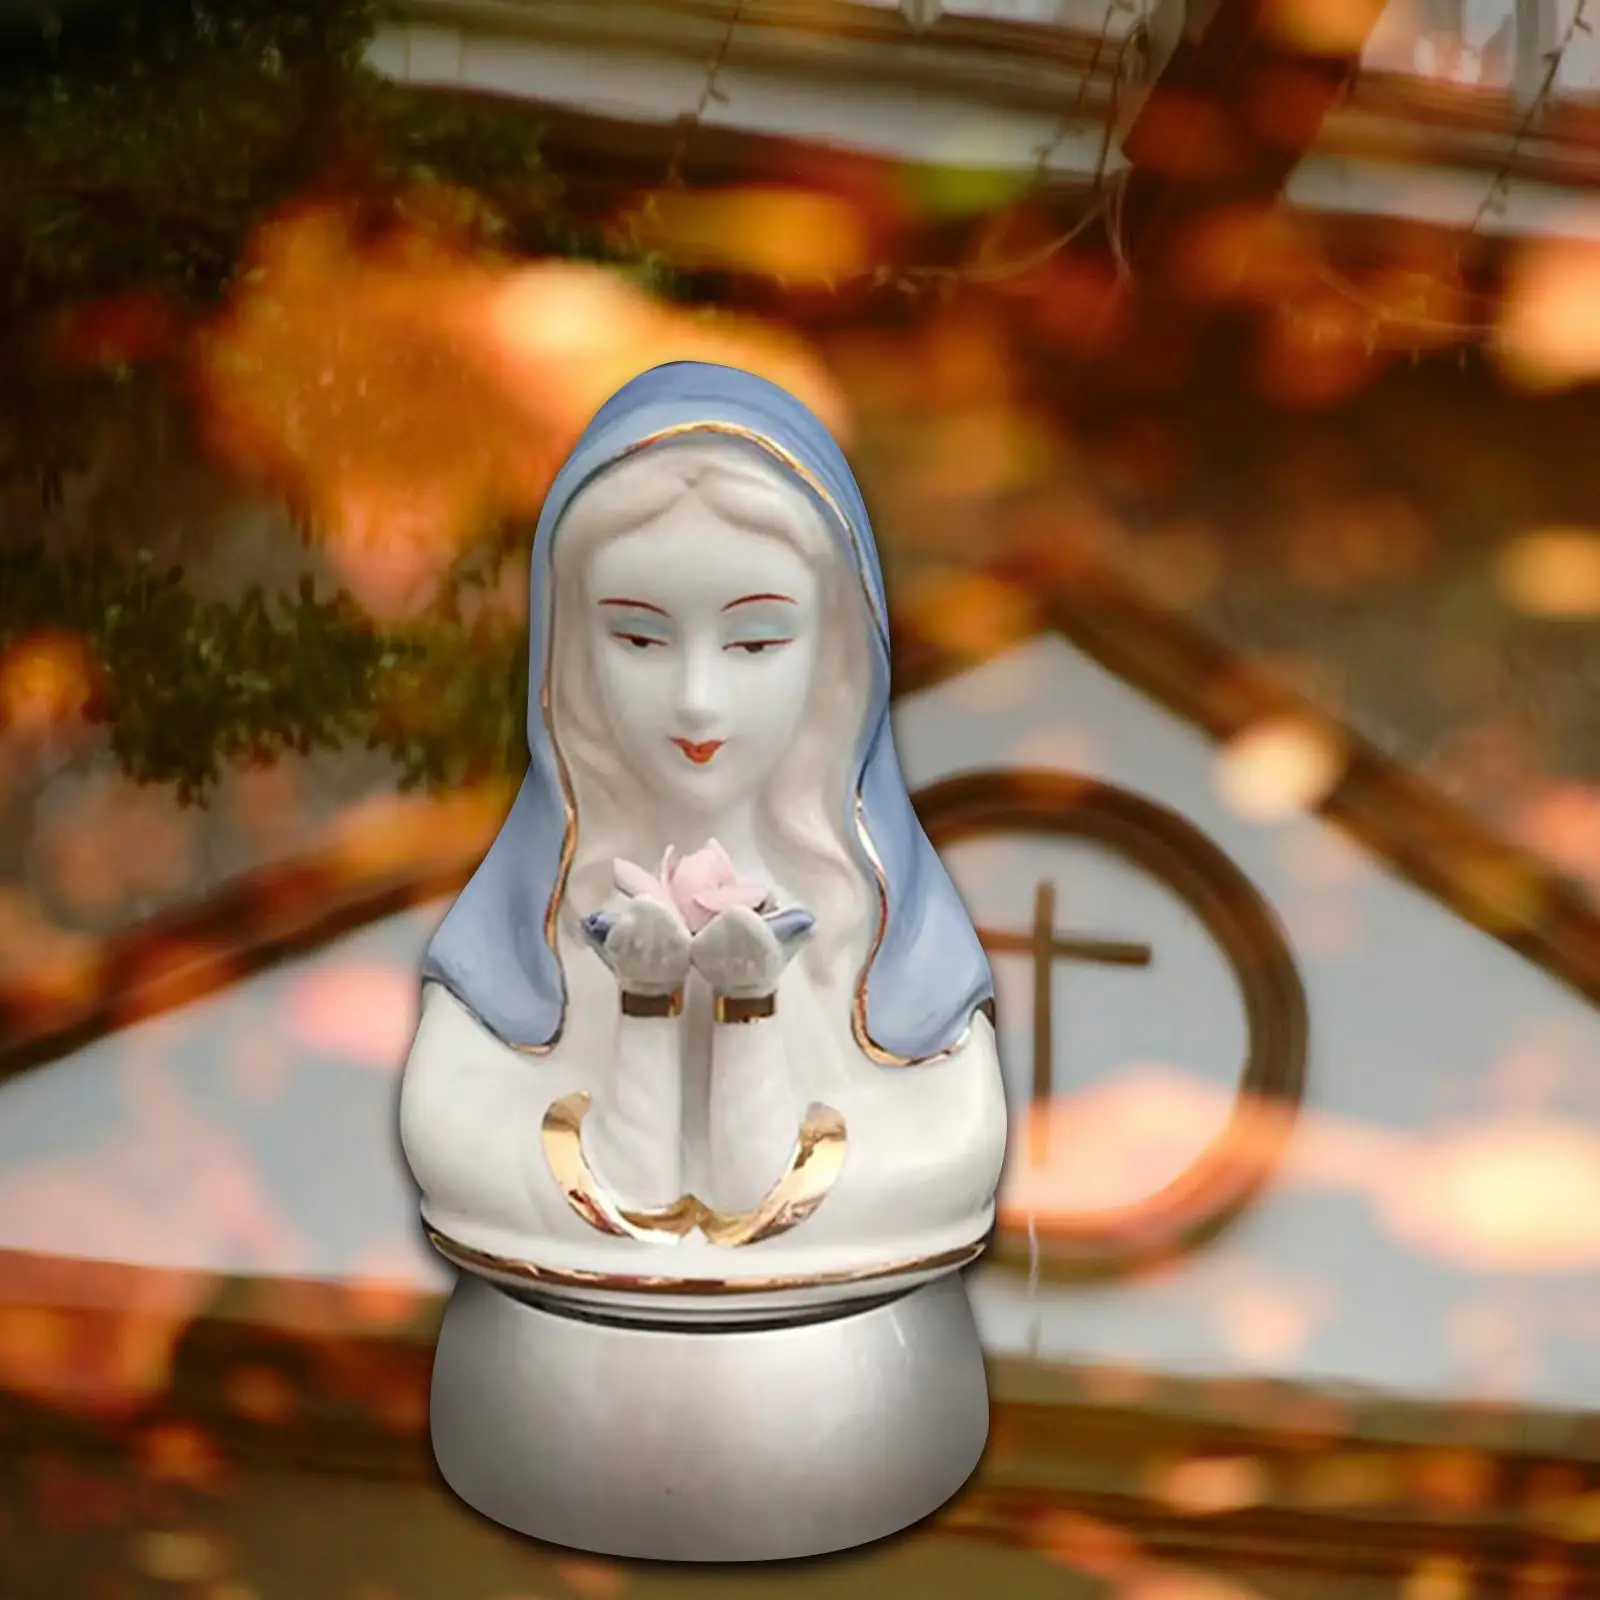 LED Virgin Mary Sculpture Figurine Light Decorative Religious Lantern Desktop